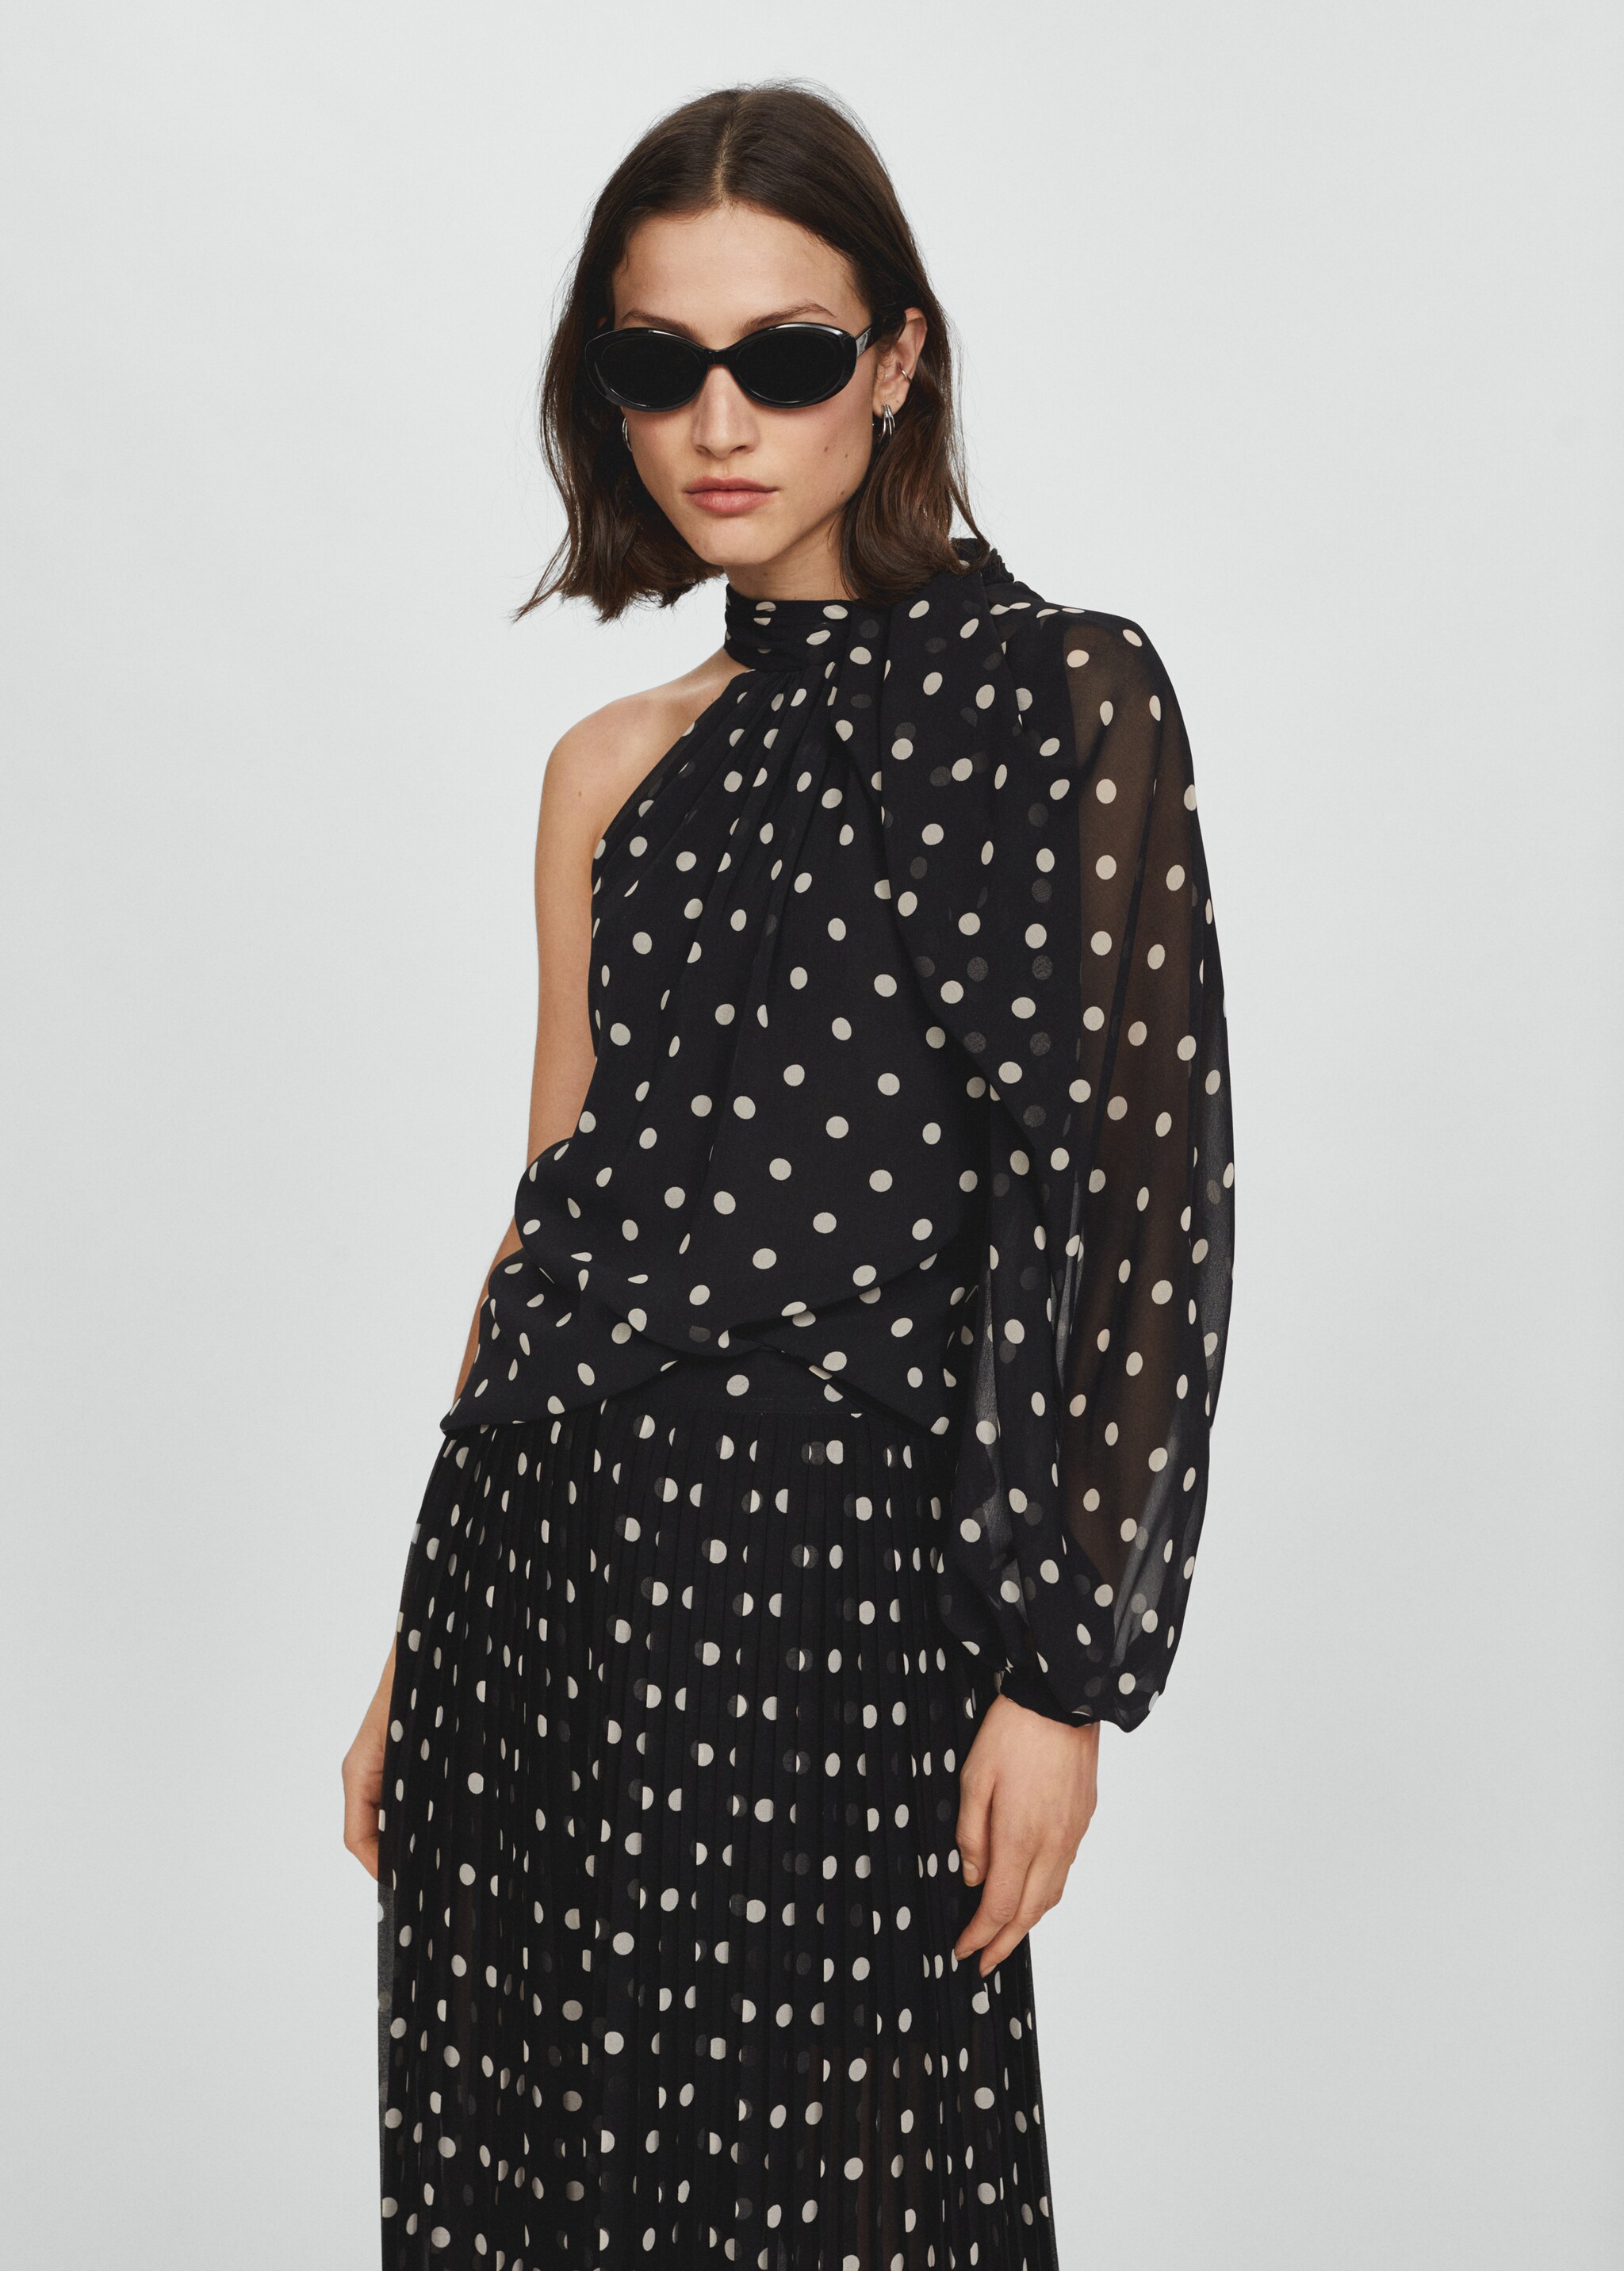 Asymmetric polka dot blouse - Medium plane